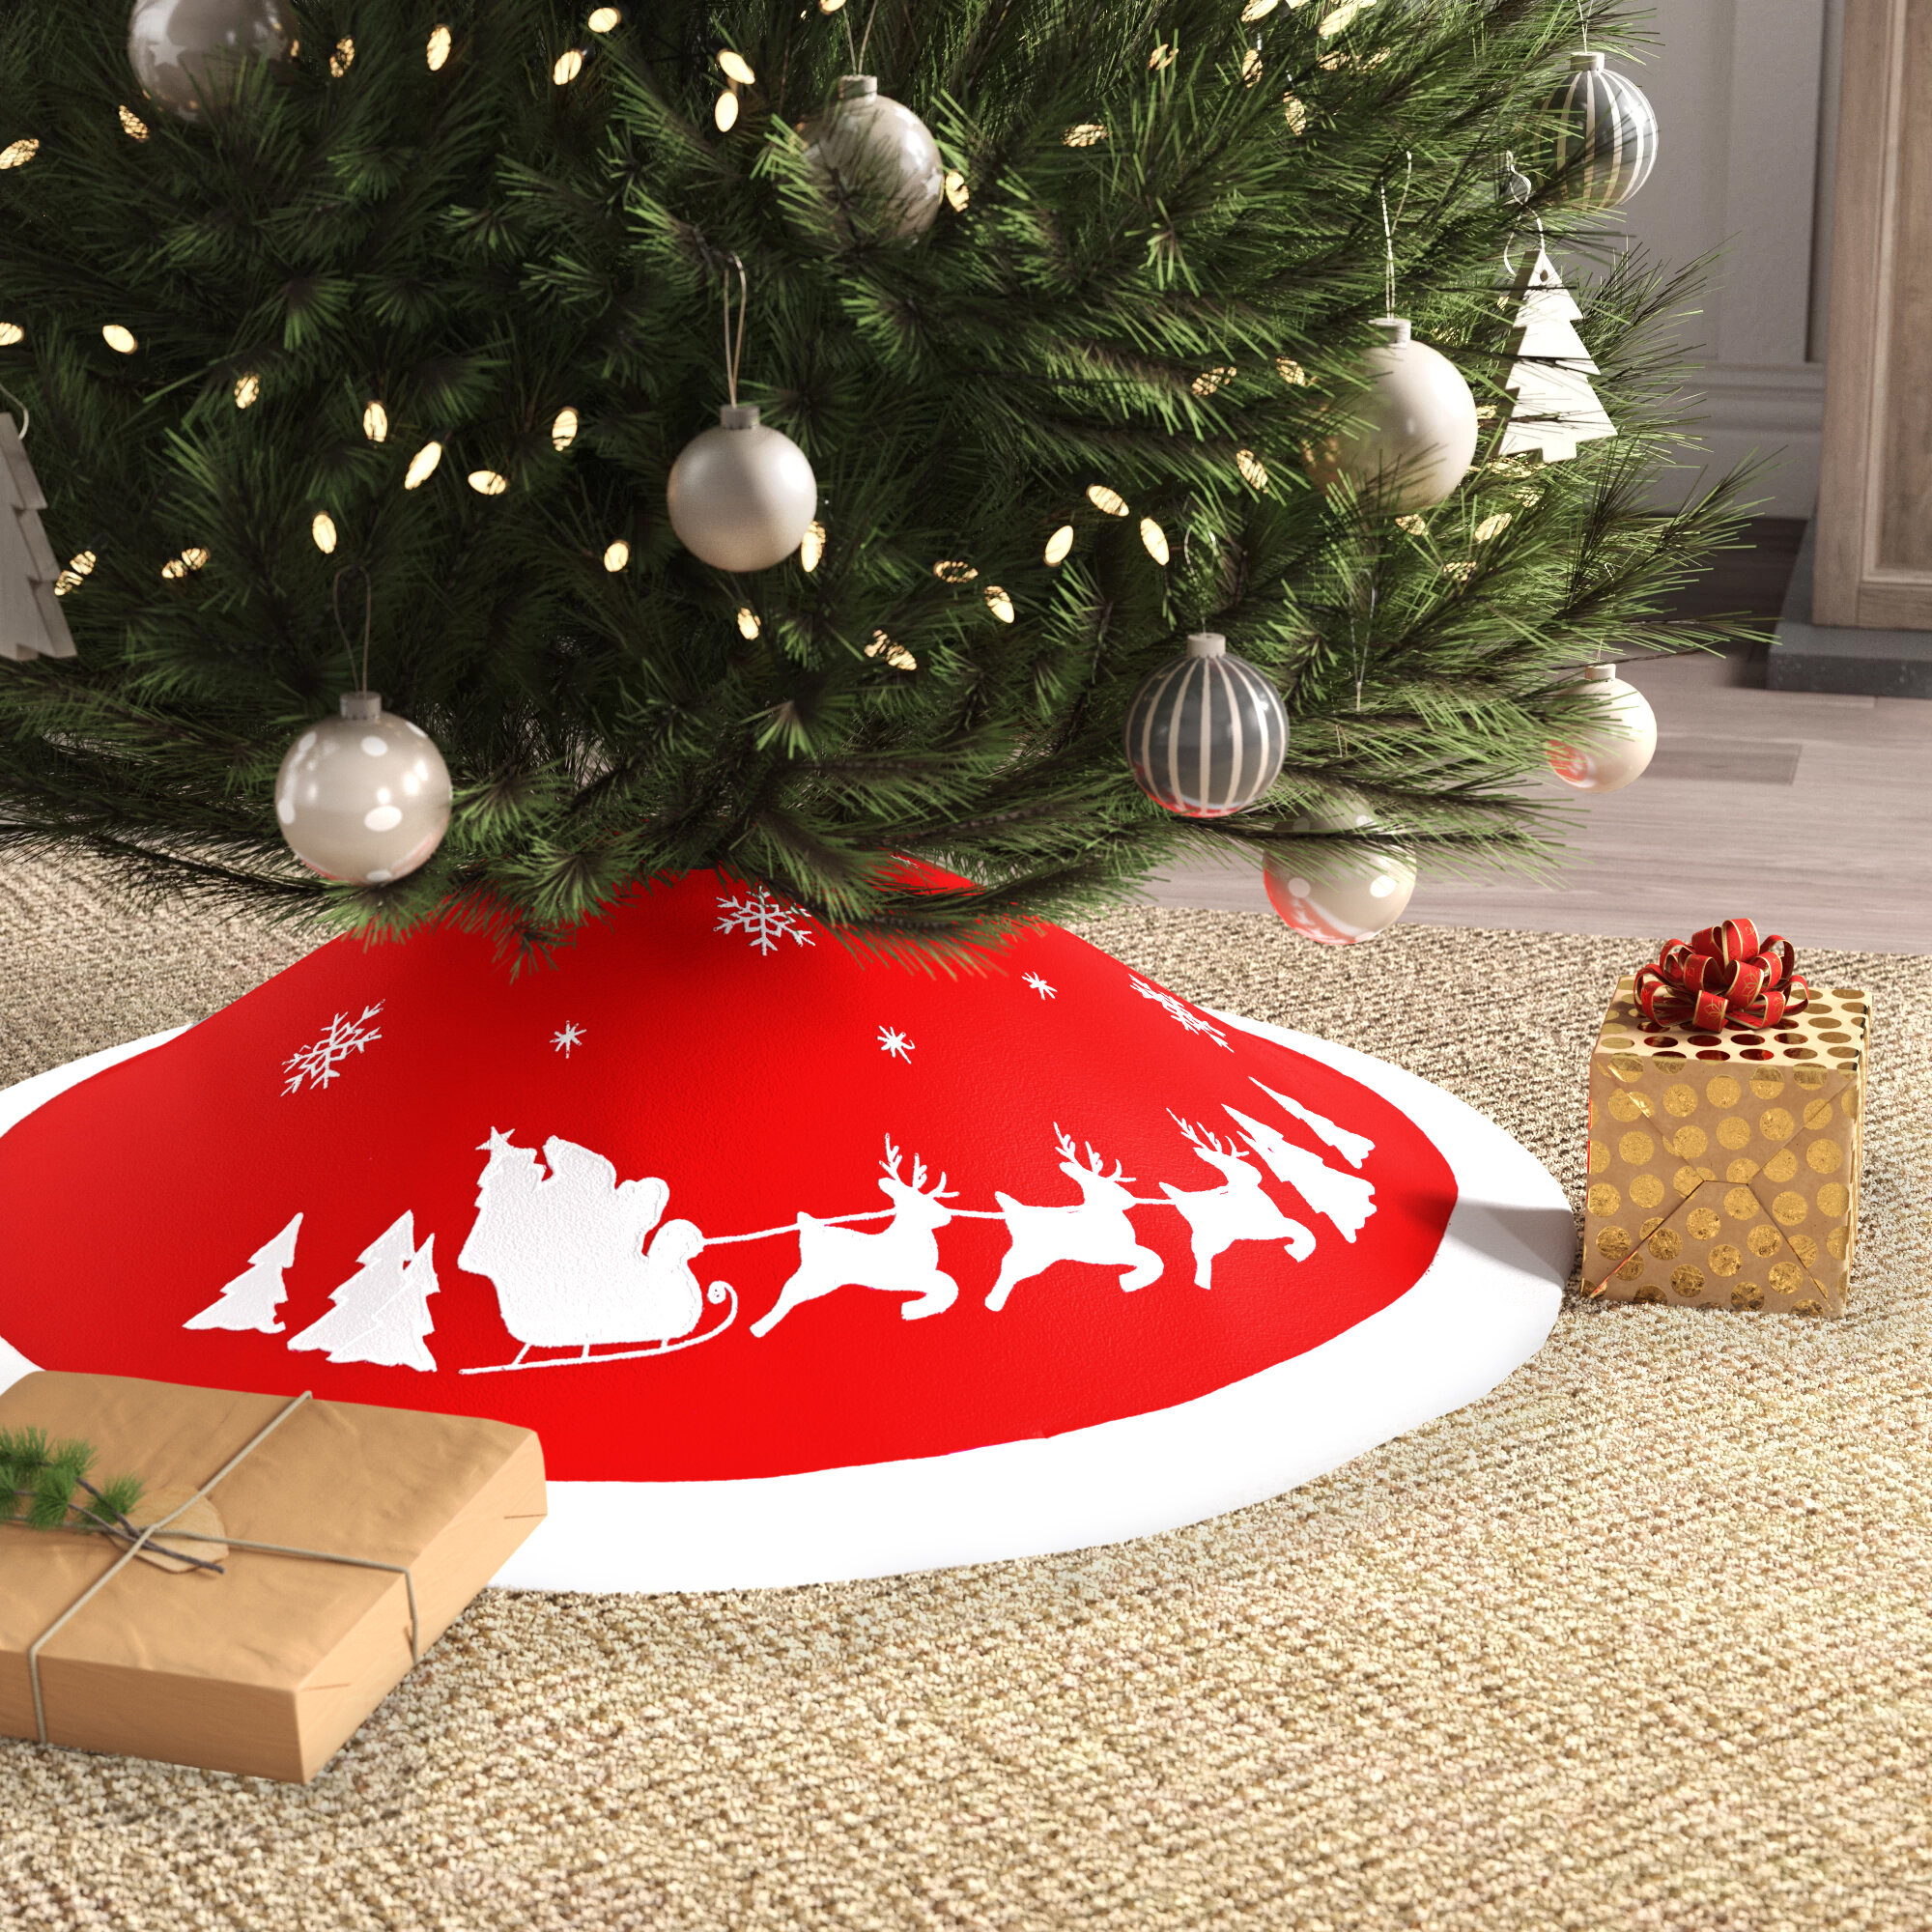 Deer Plush Xmas Tree Skirt with Tassels Christmas Holiday Decoration My Daily Santa Snowman Christmas Tree Skirt 36 inch